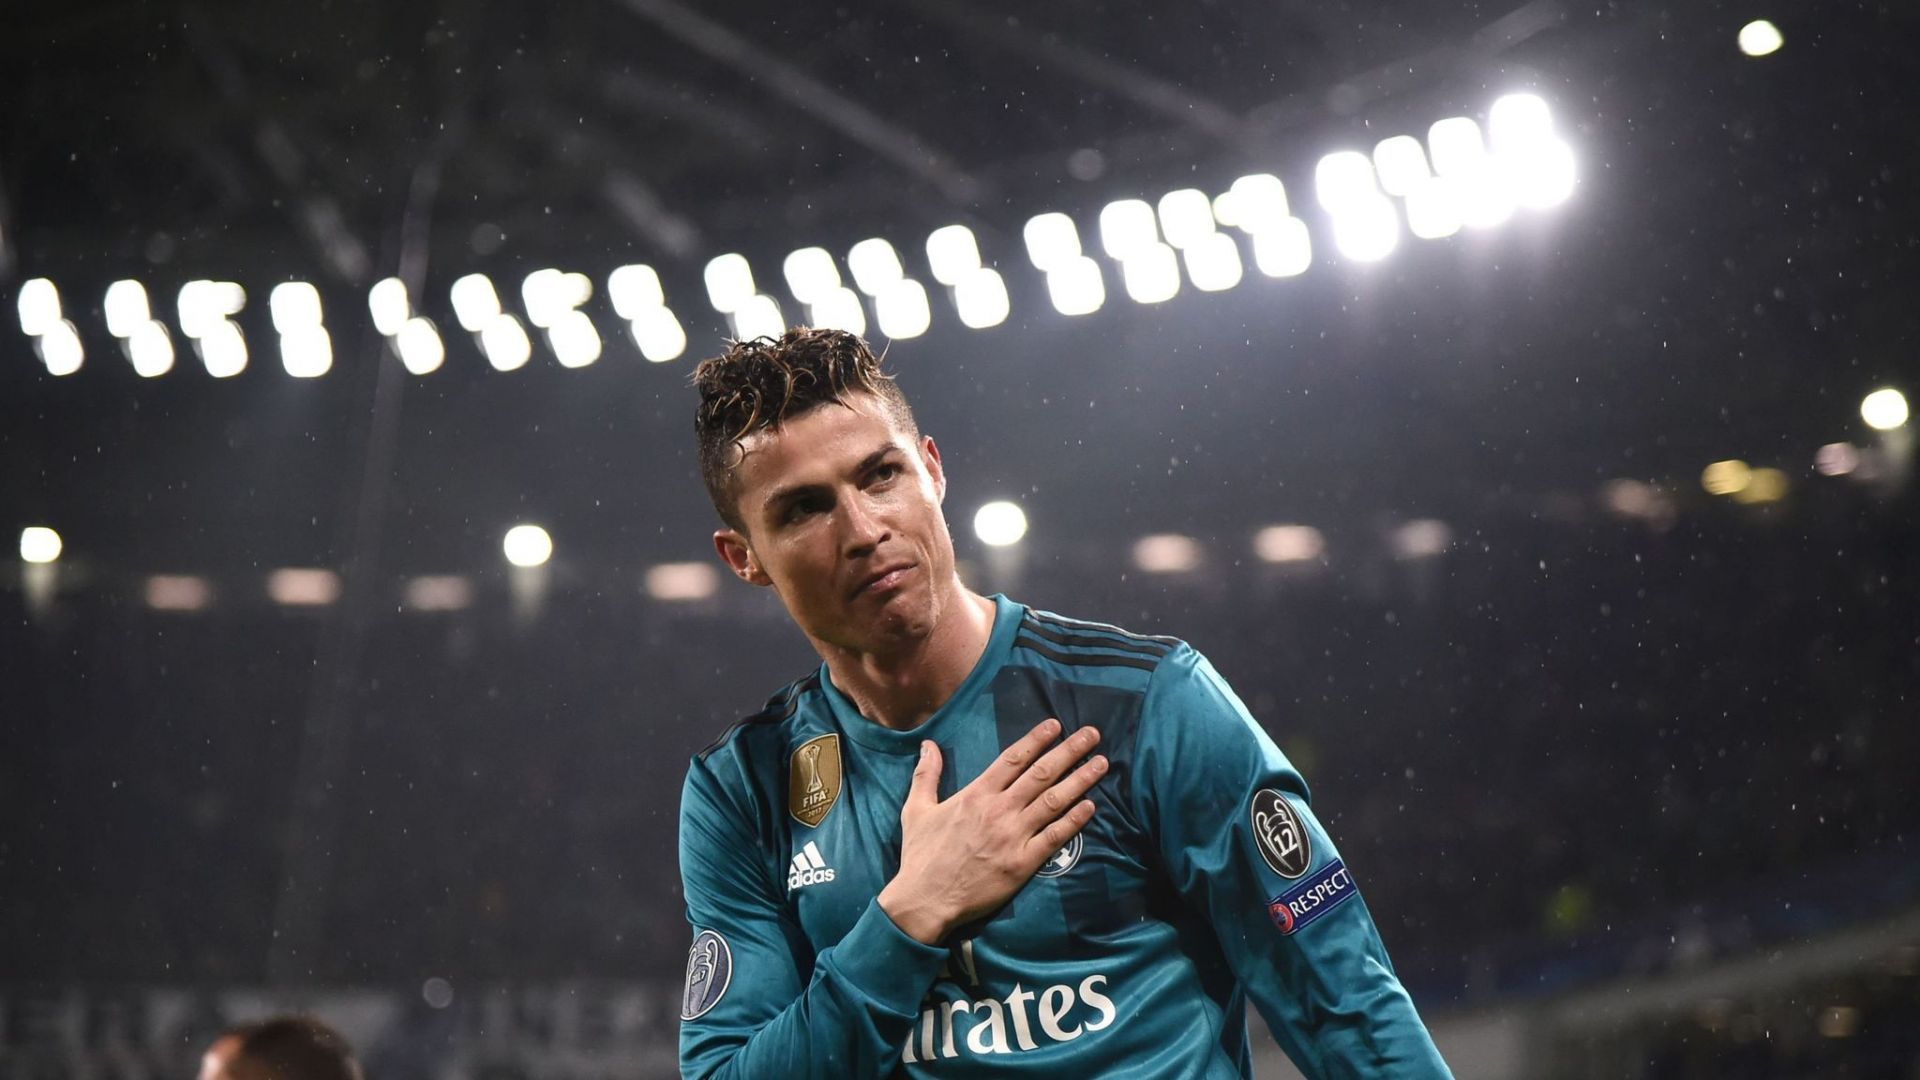 Ronaldo expressed his gratitude to the Juventus fans